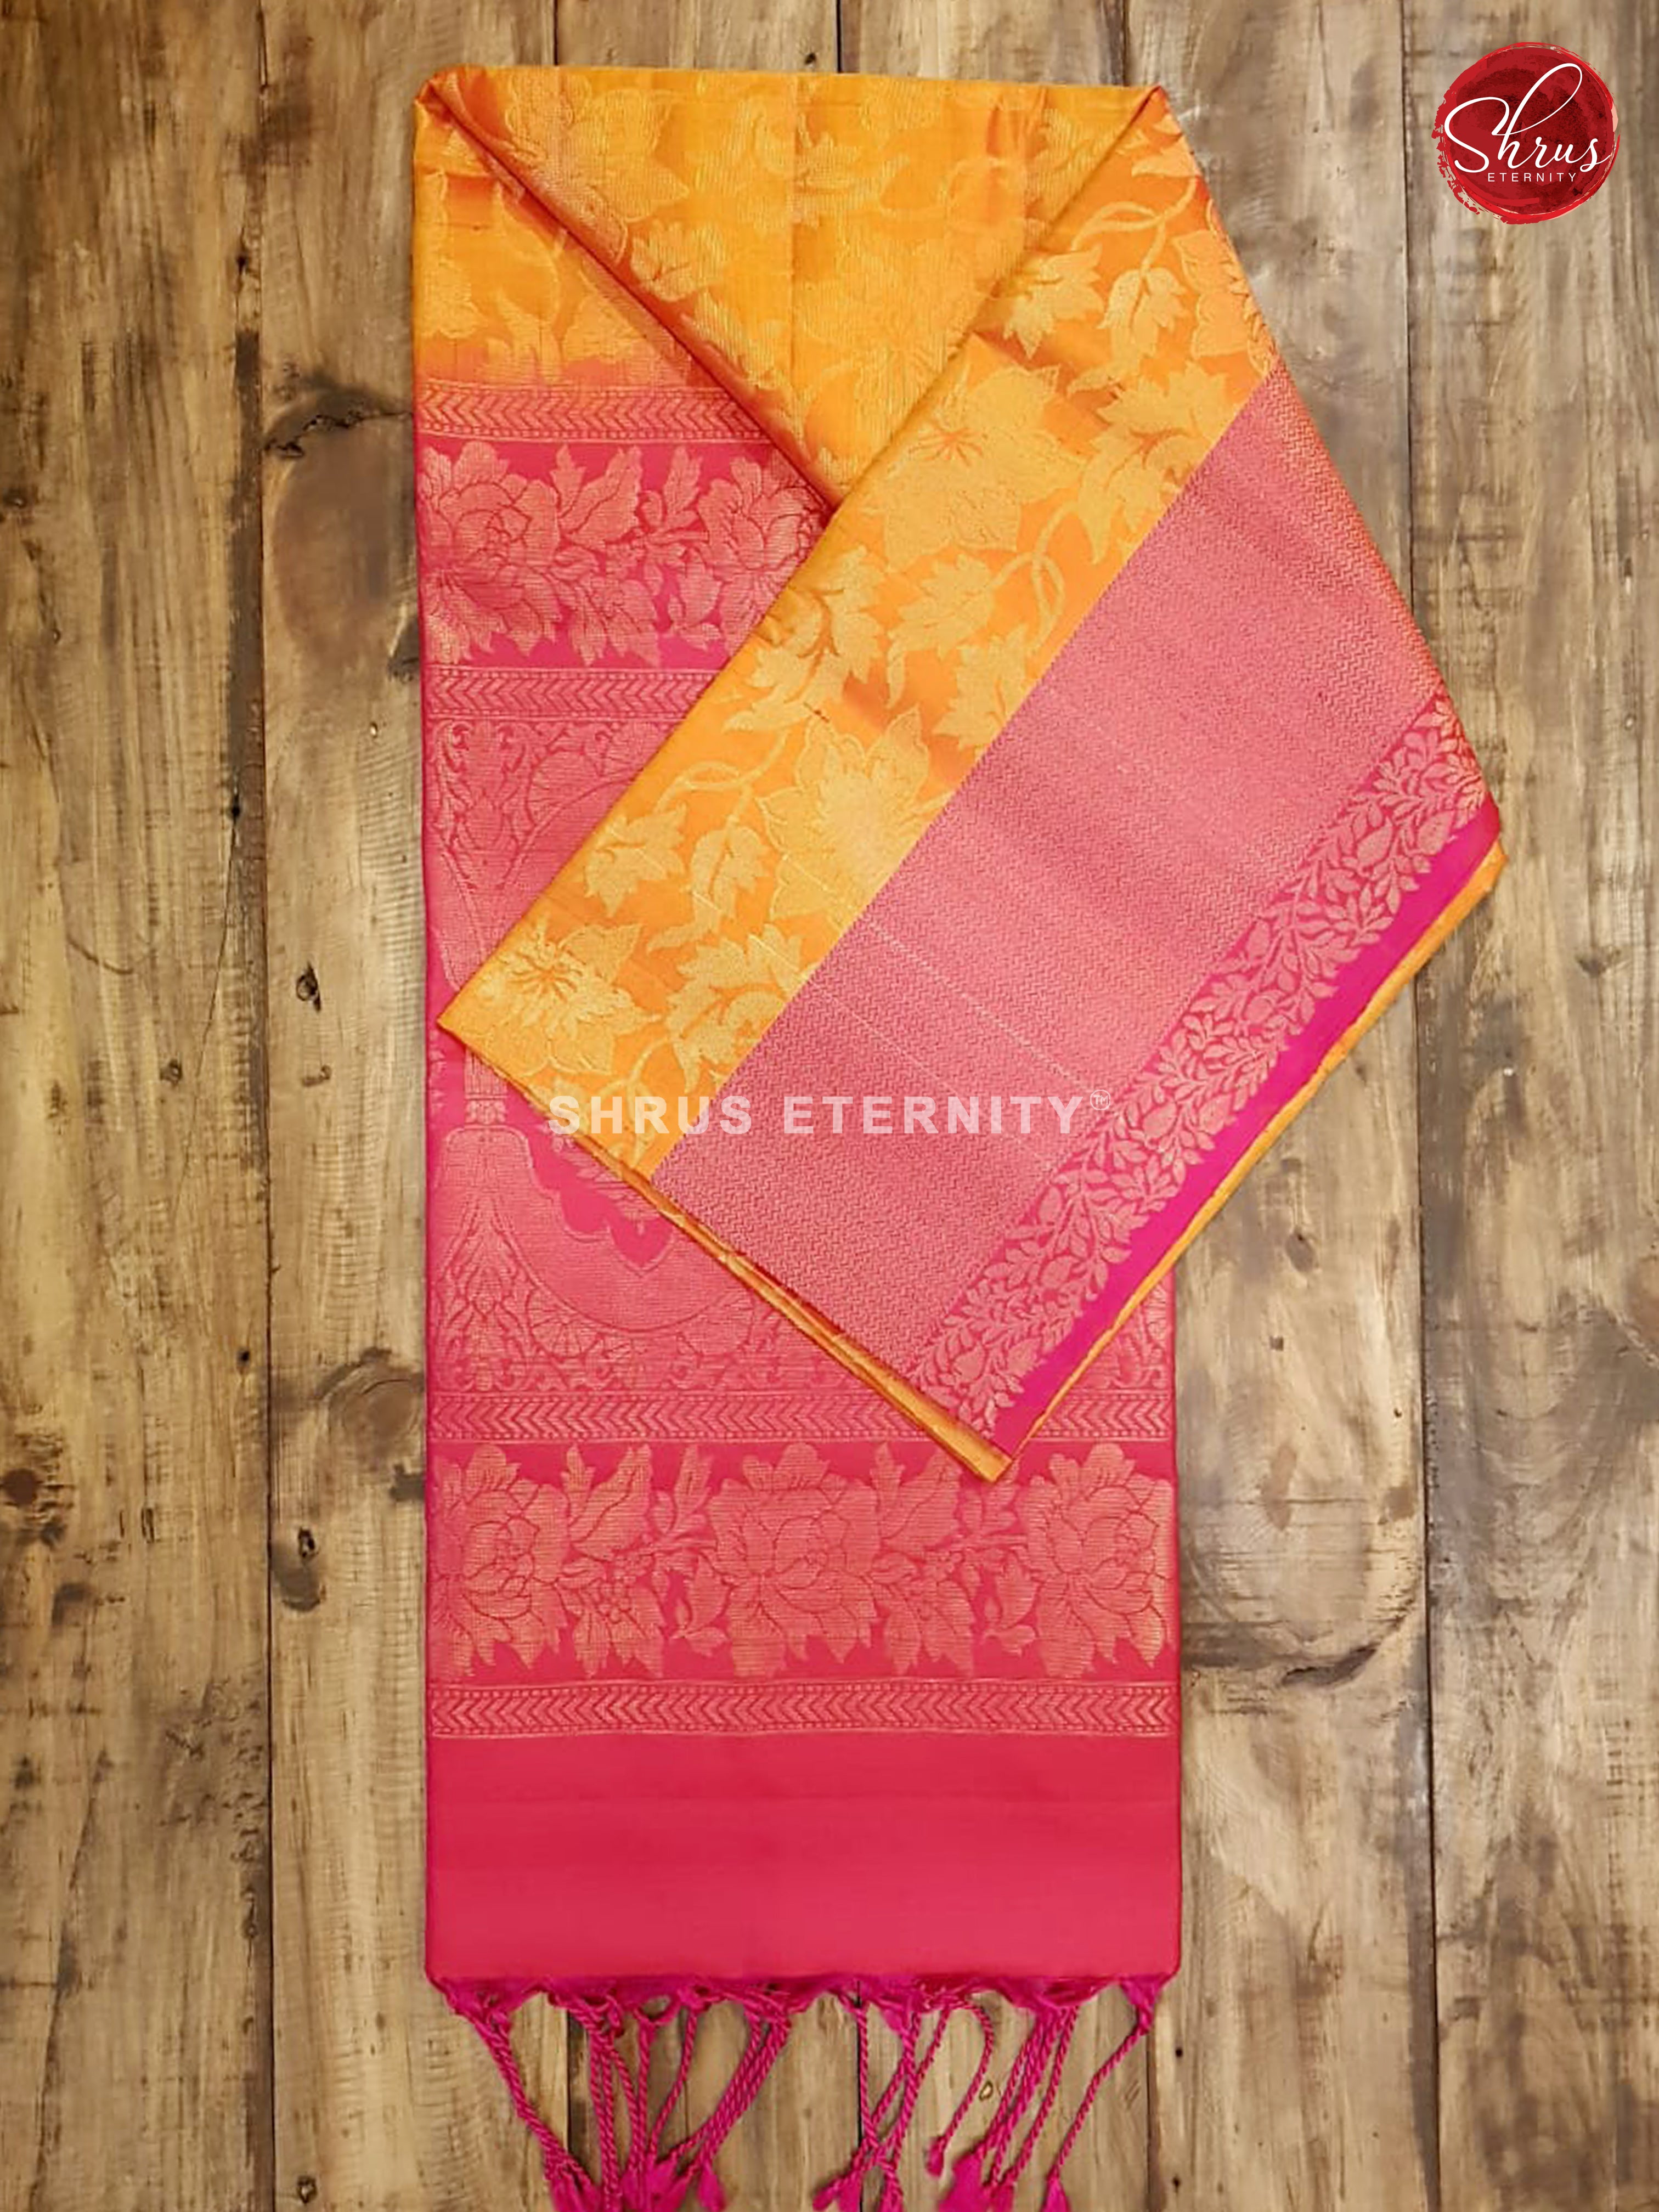 Golden Yellow & Pink - Soft Silk - Shop on ShrusEternity.com